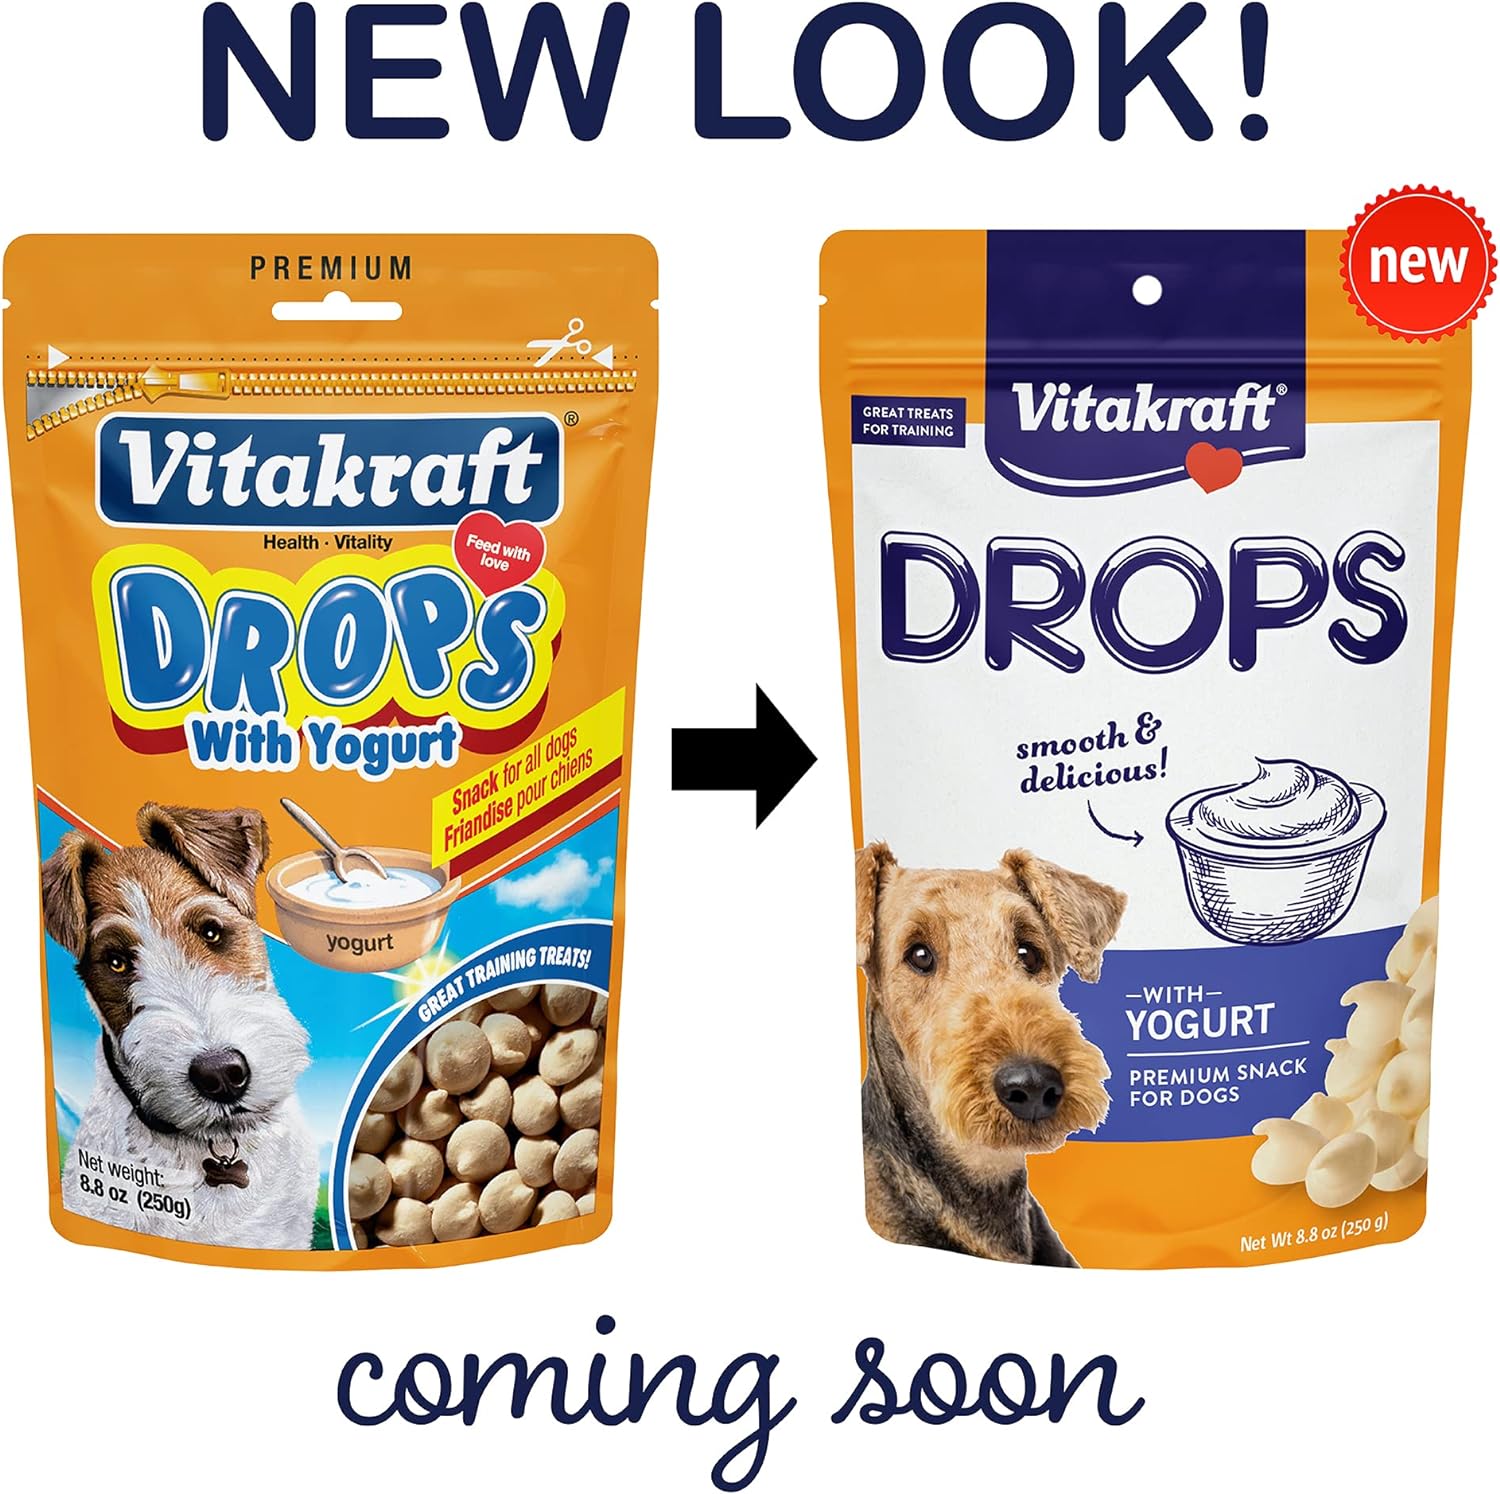 Vitakraft Drops with Yogurt Treats for Dogs, Bite-Sized Trai